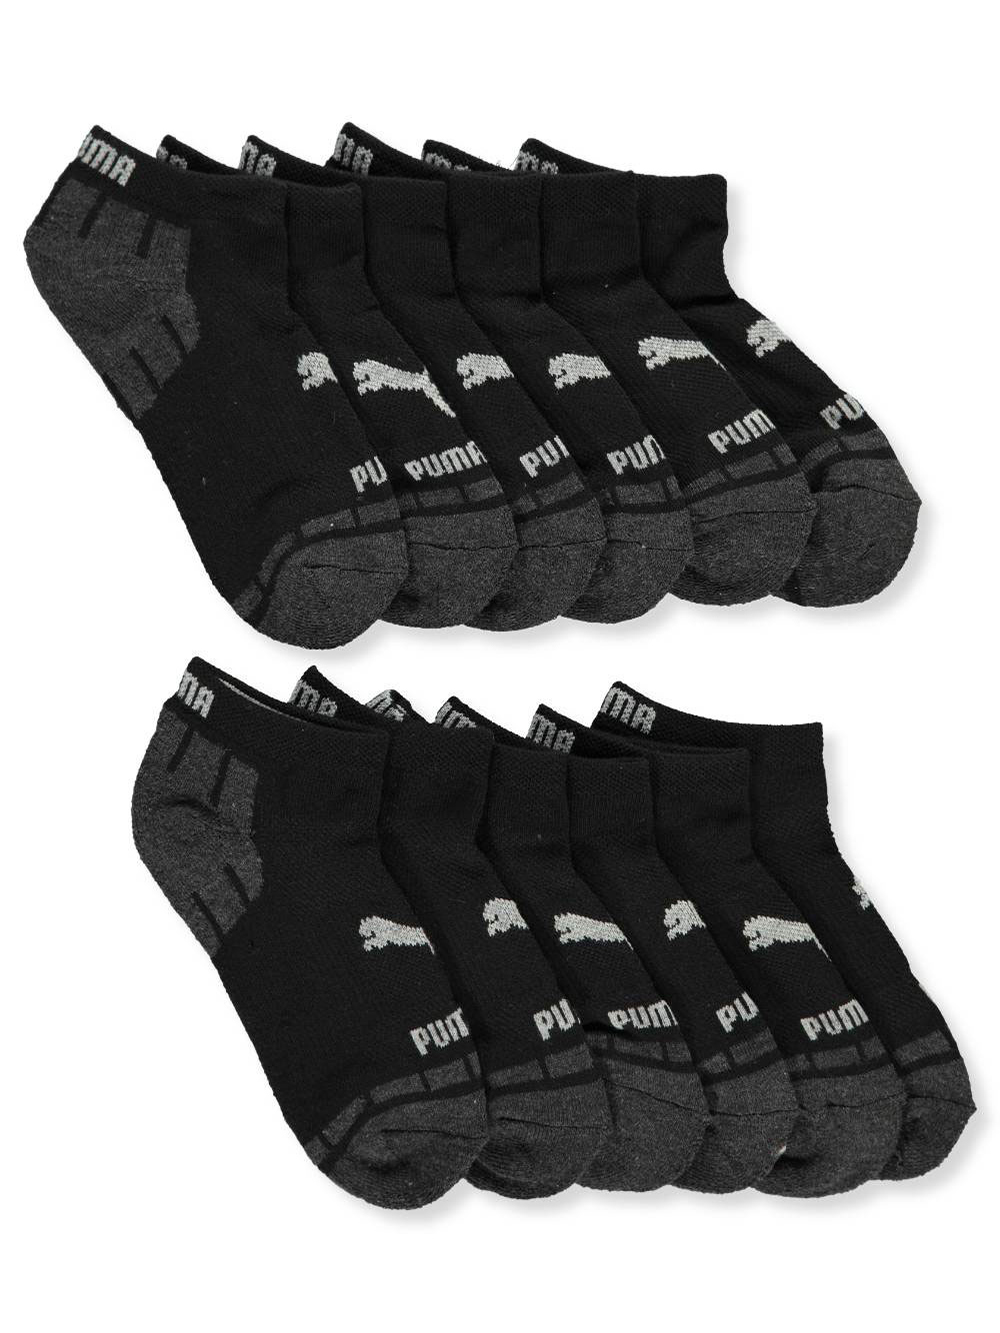 boys puma socks